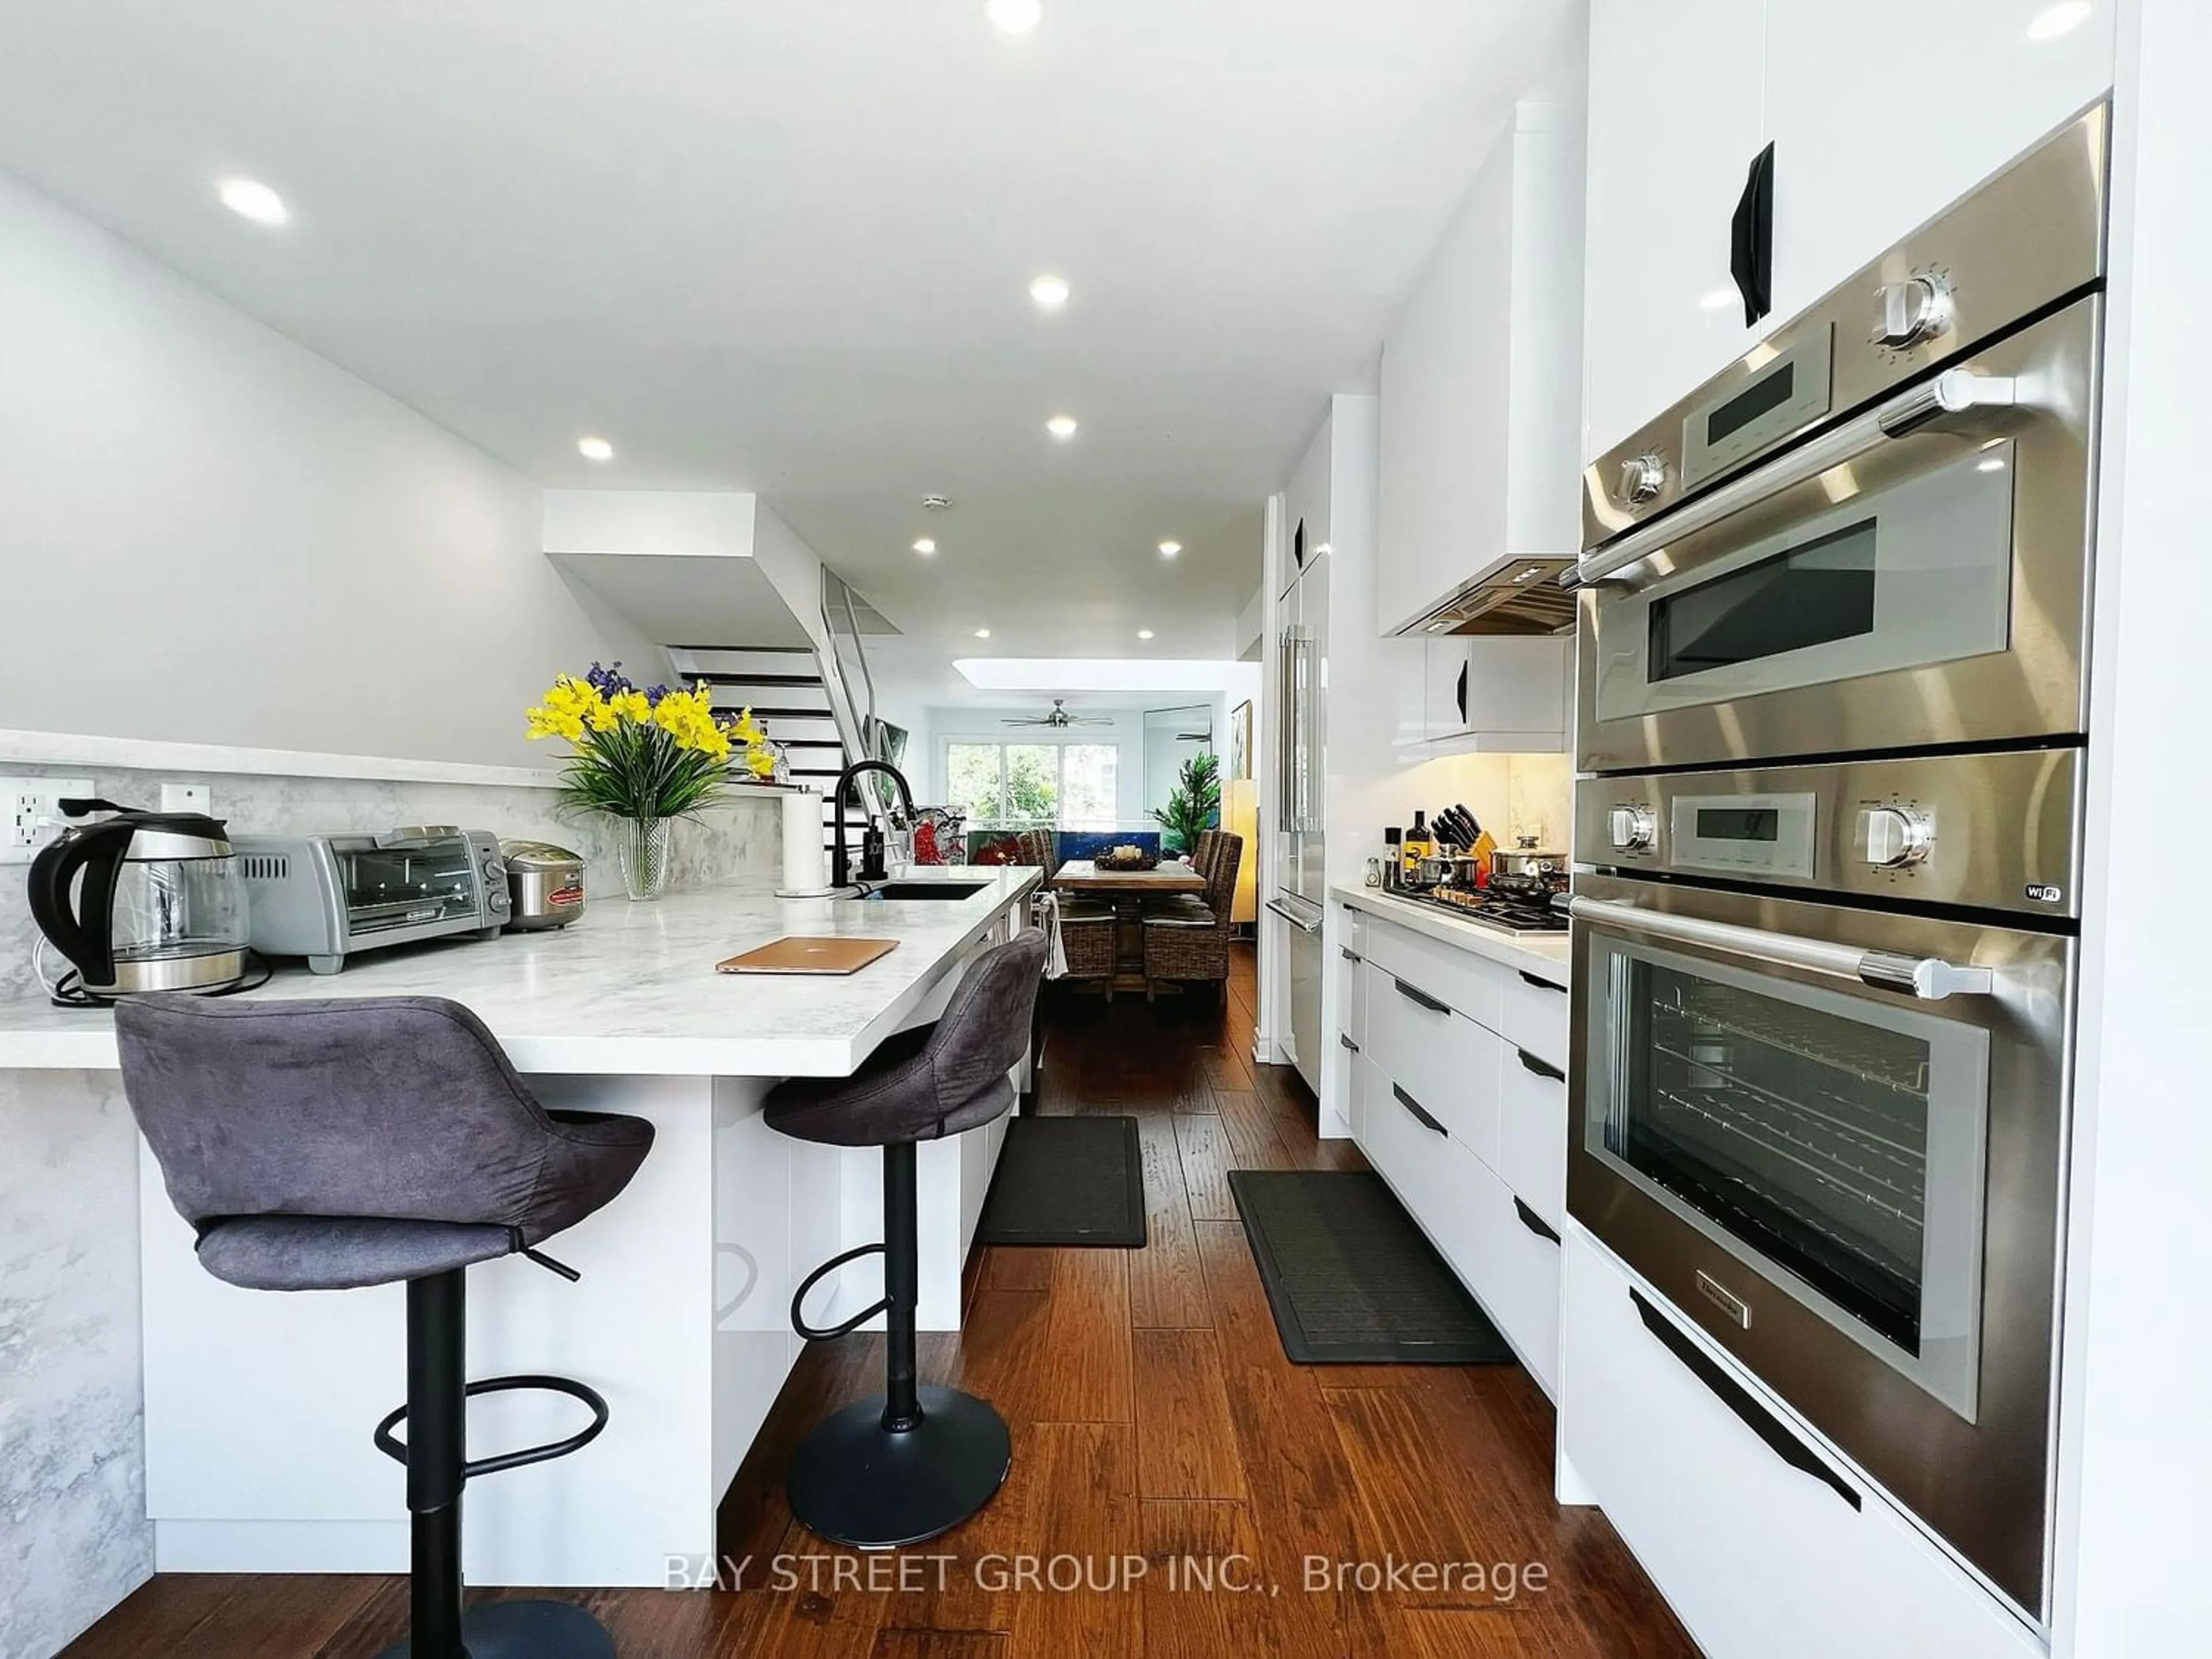 Contemporary kitchen for 48 Berryman St, Toronto Ontario M5R 1M6